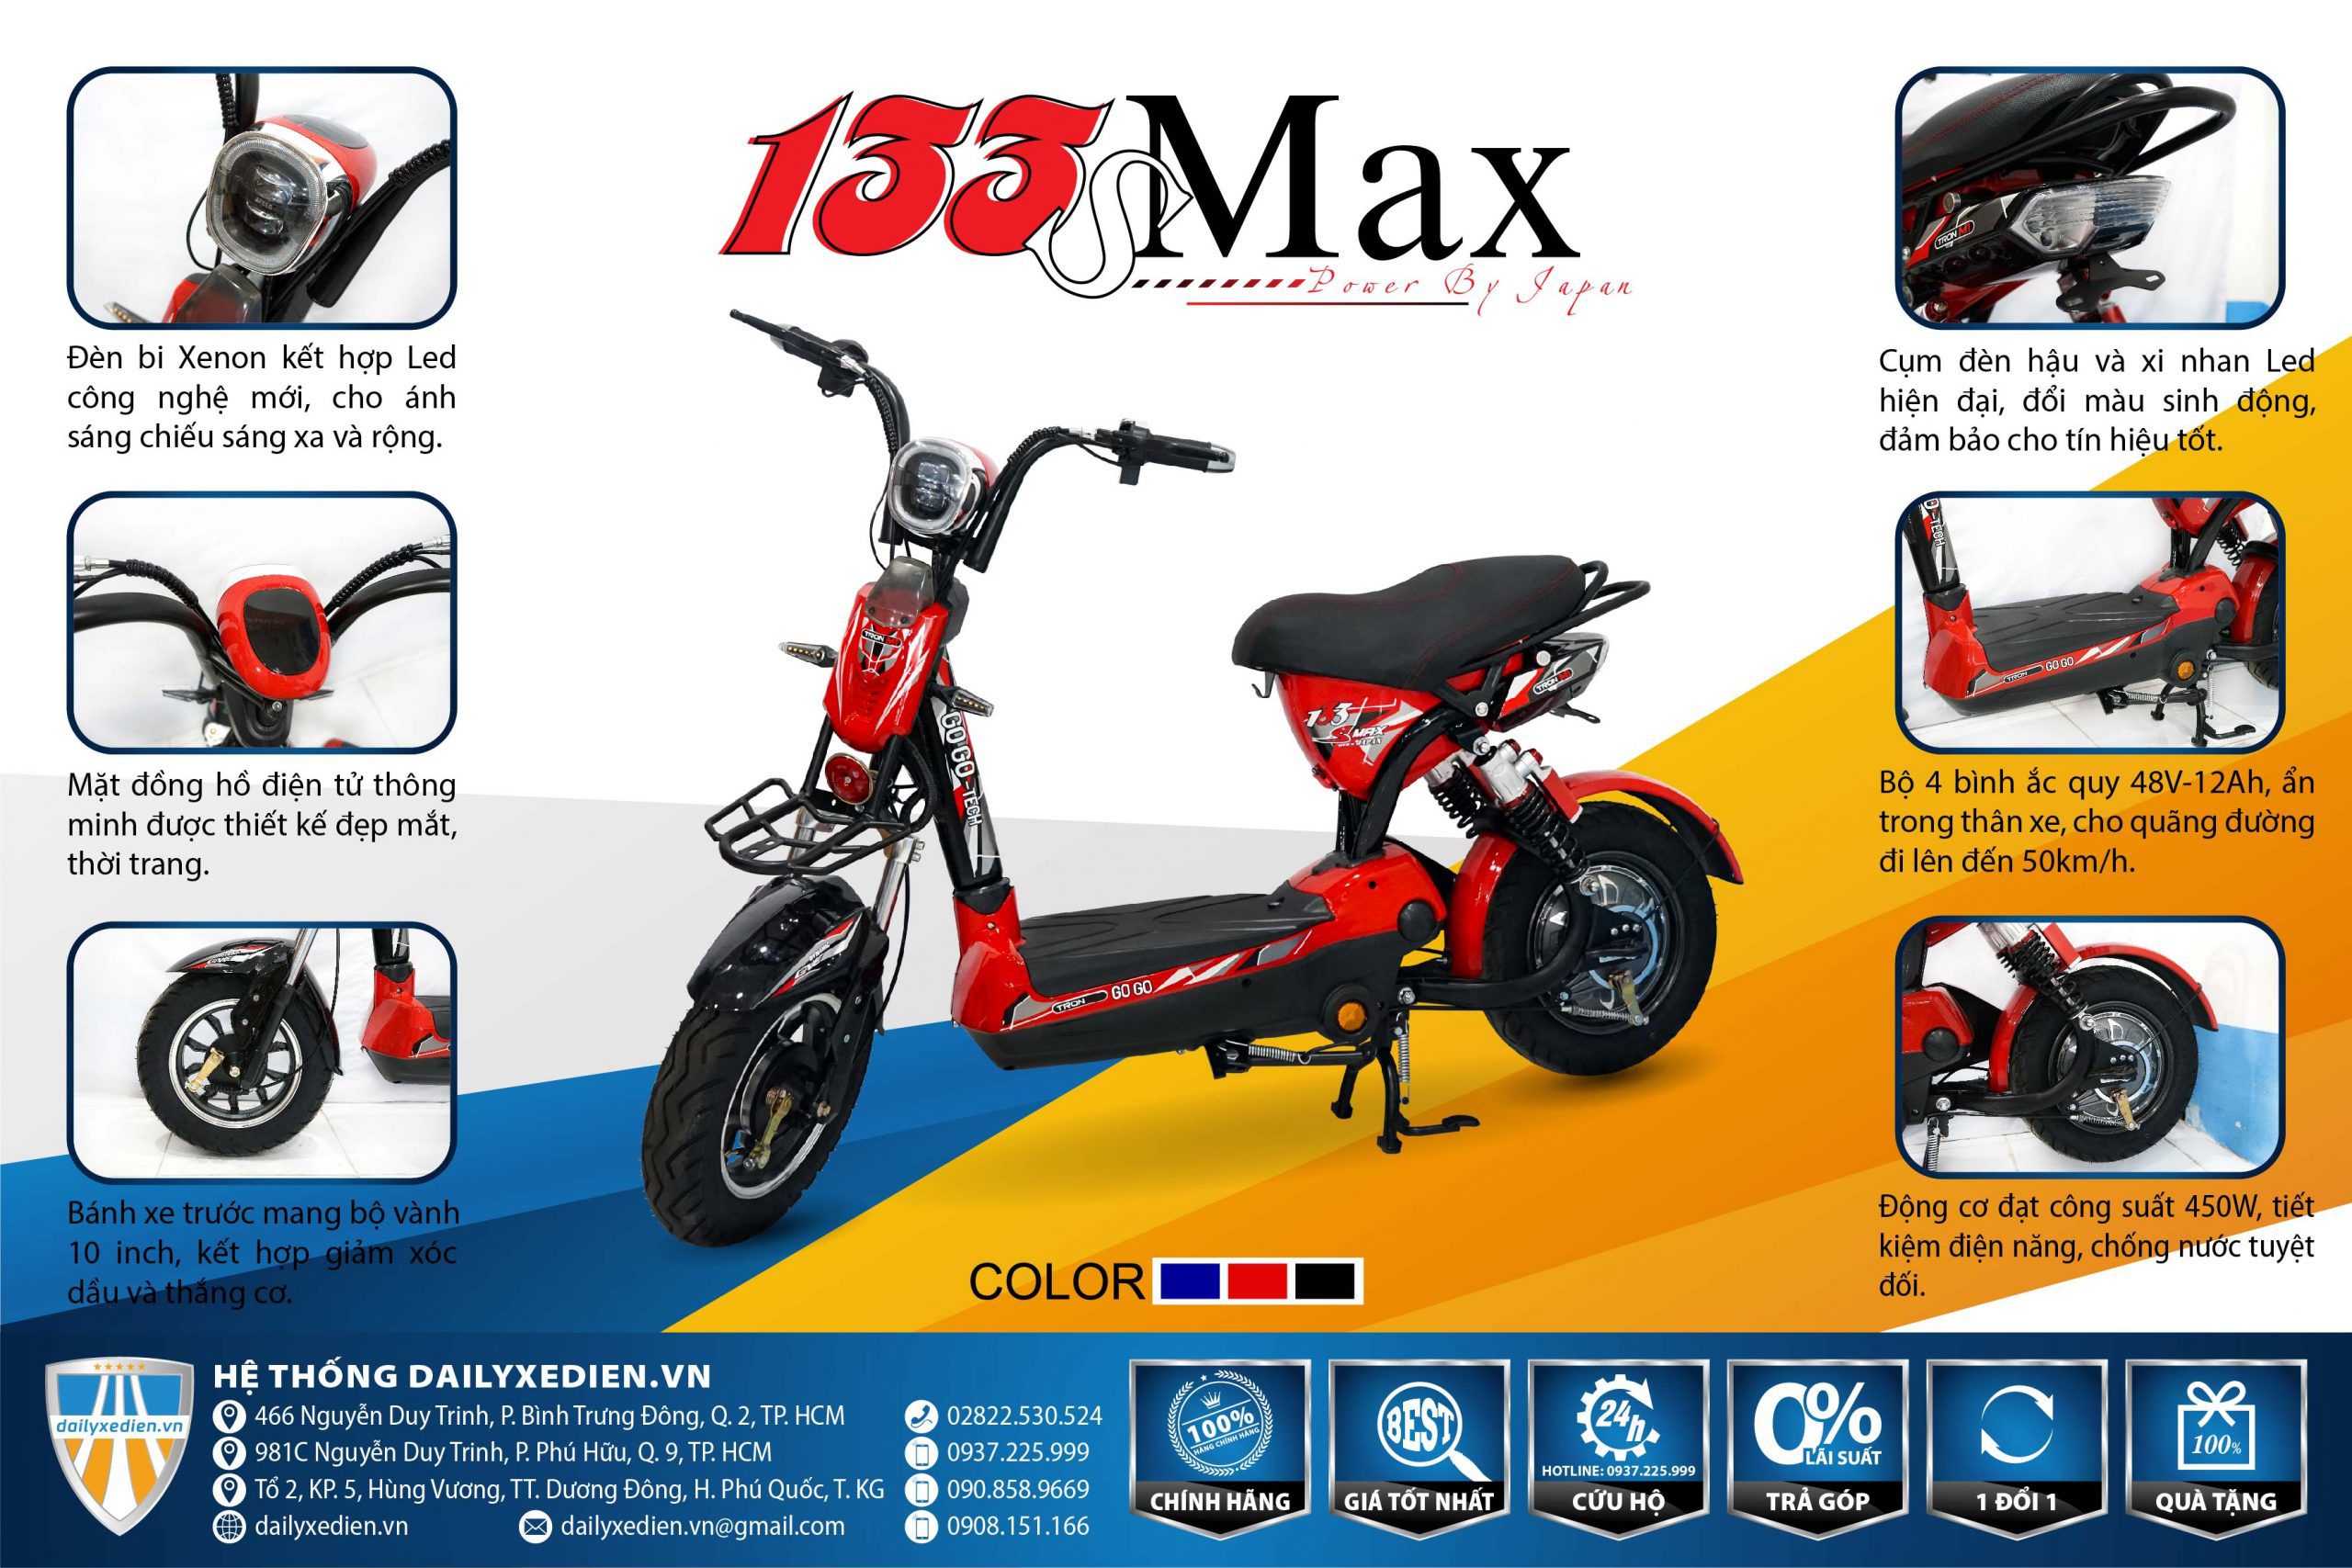 xe dap dien 133 S Max 20 TT 01 scaled - Xe đạp điện 133 S Max